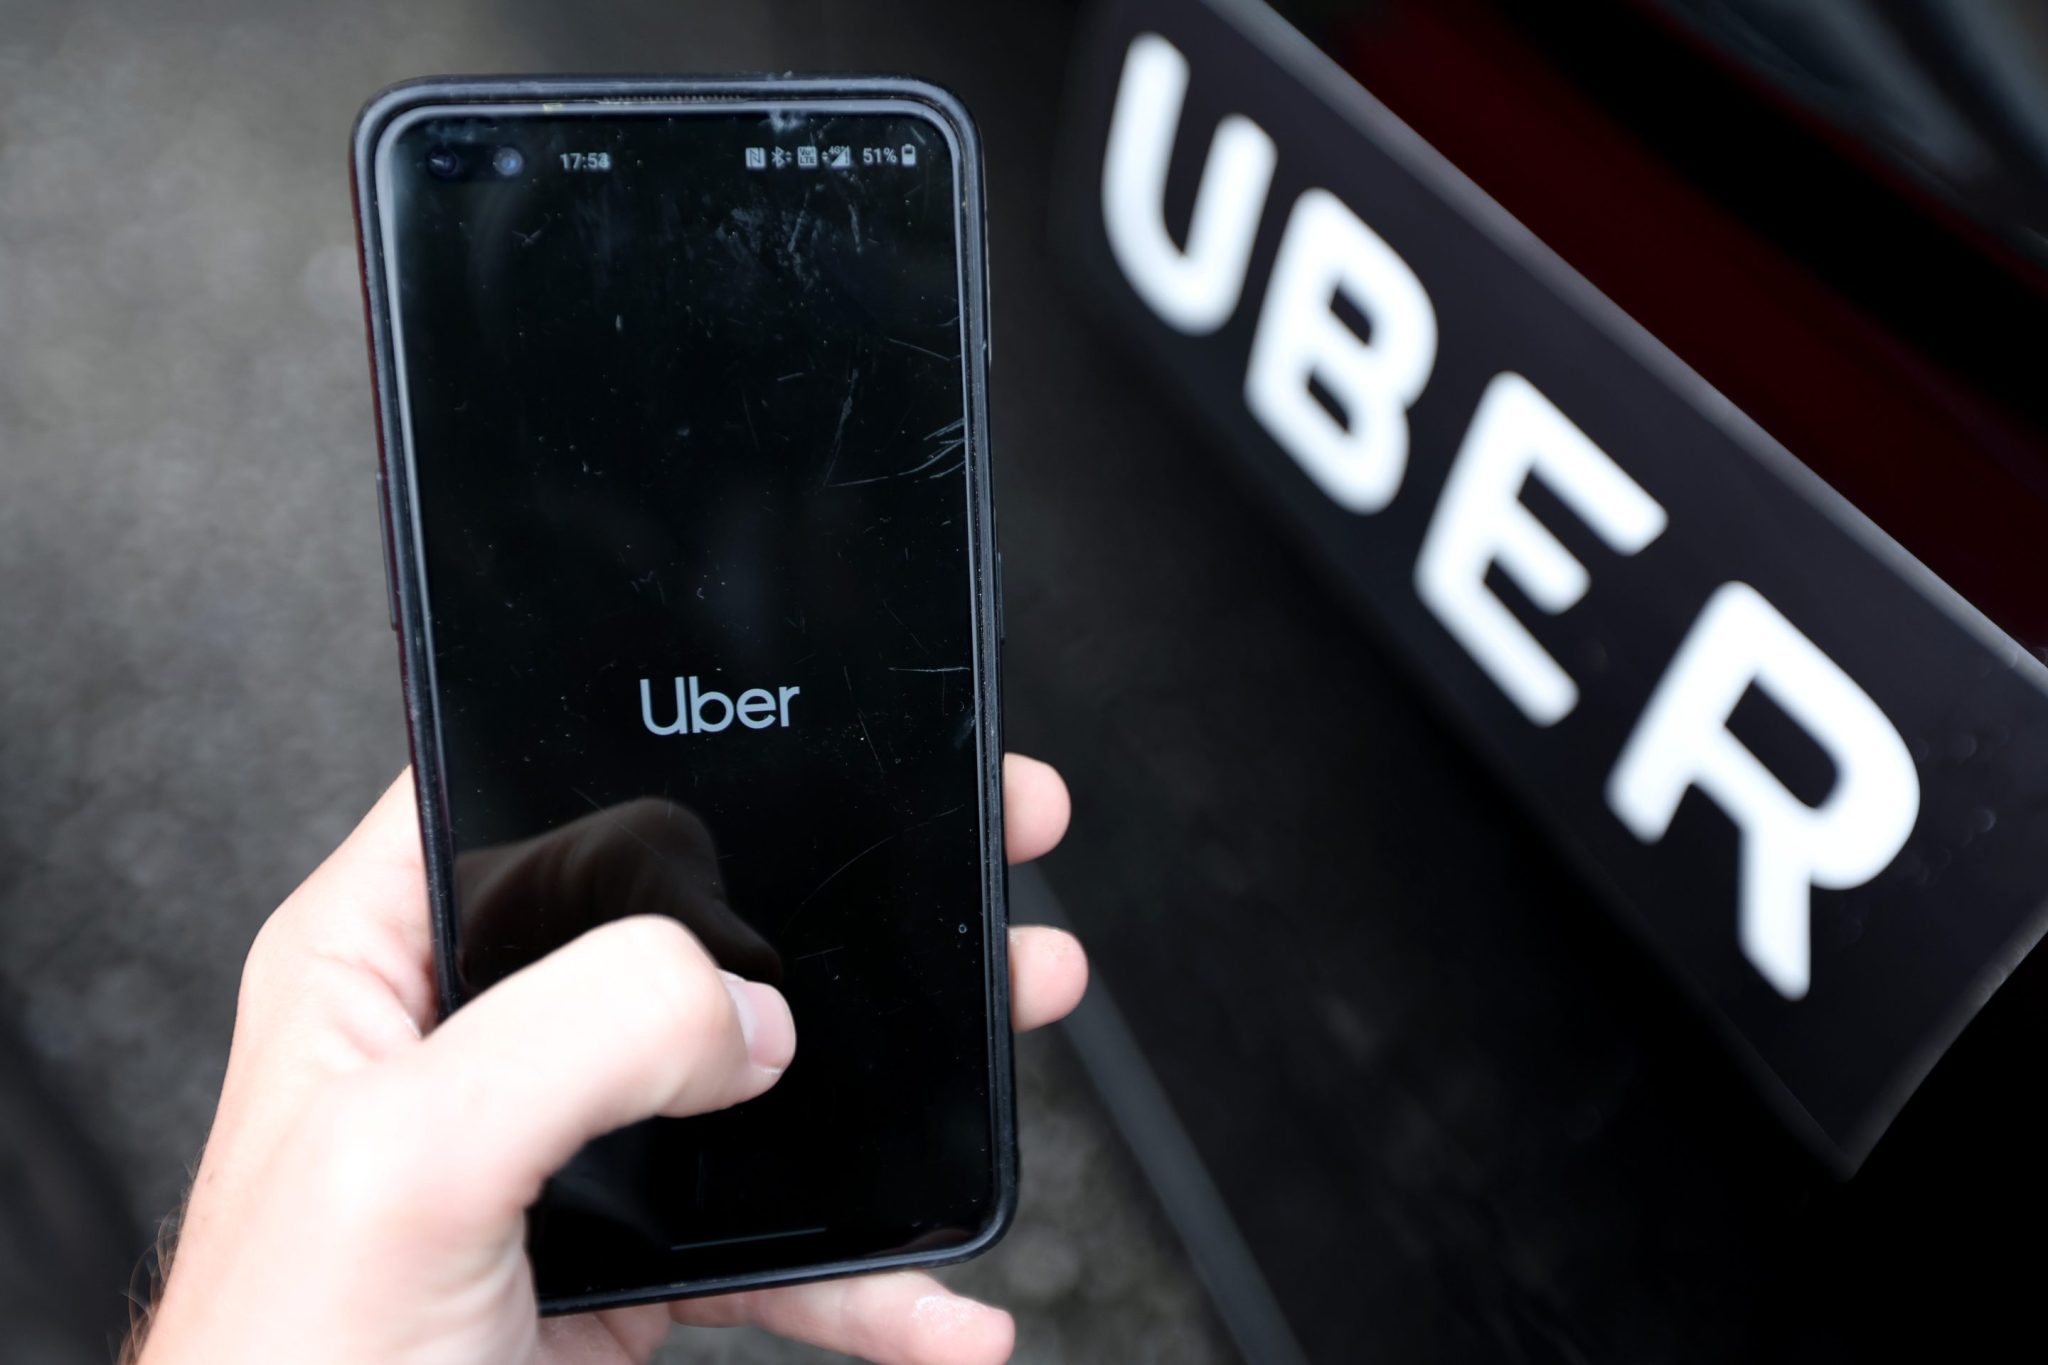 Uber: Big job losses in Europe if EU gig worker proposal passes